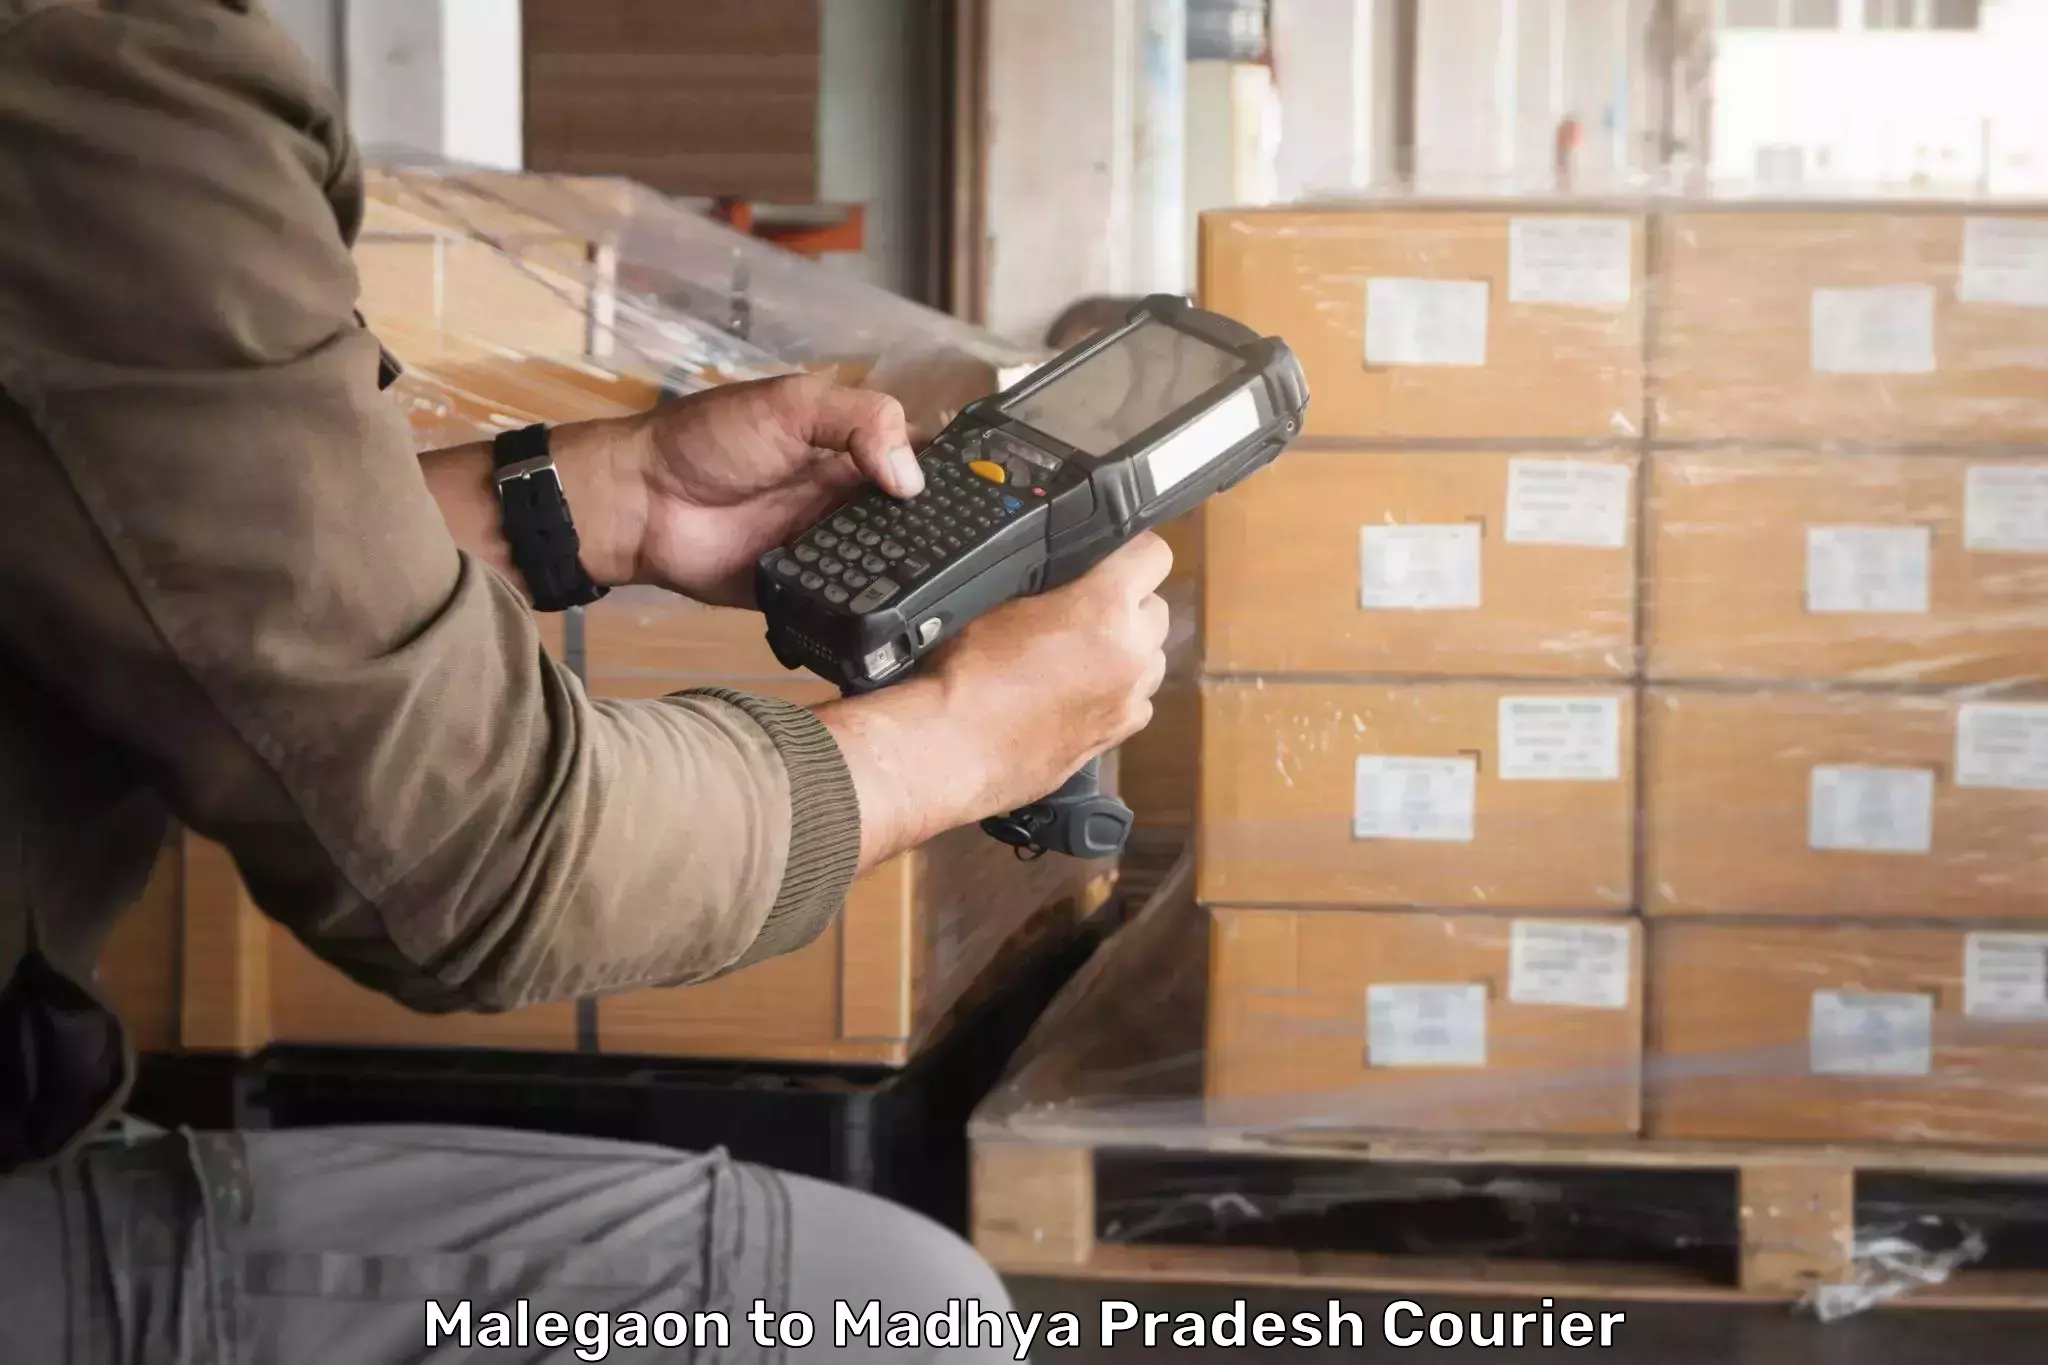 Local delivery service Malegaon to Madhya Pradesh